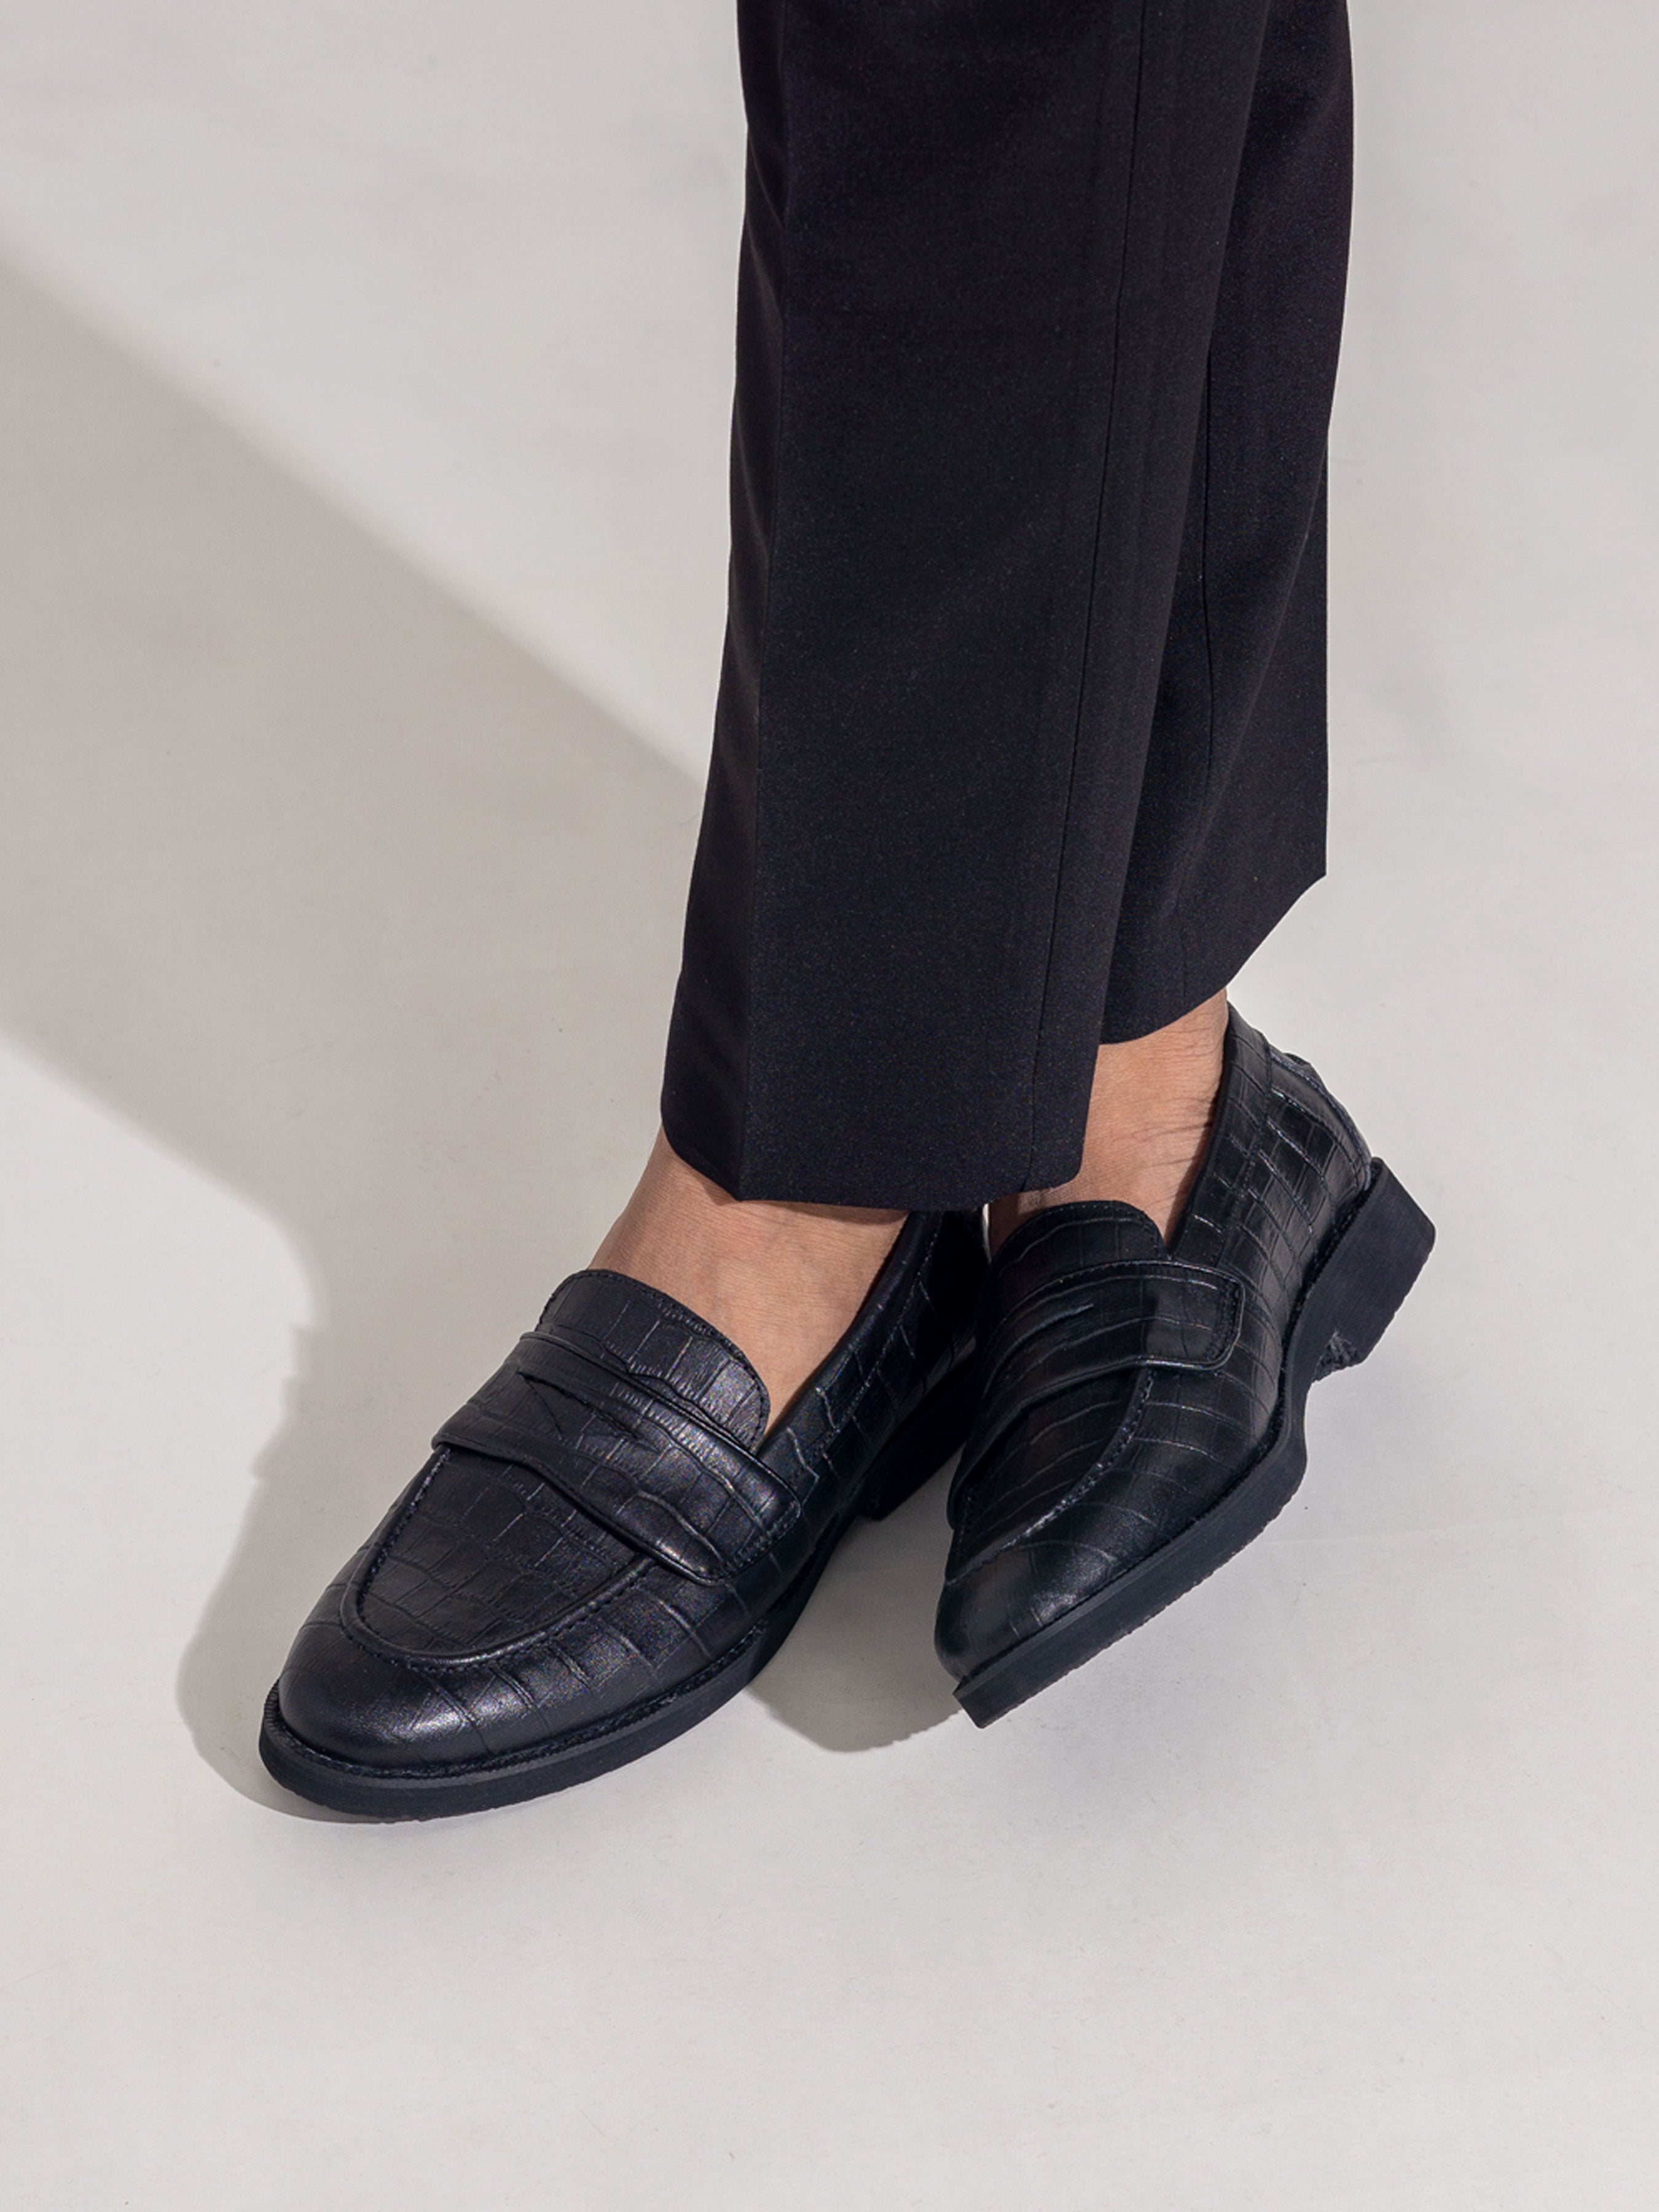 Wayne Penny Loafer - Black Croco Leather (Crepe Sole) - Zeve Shoes